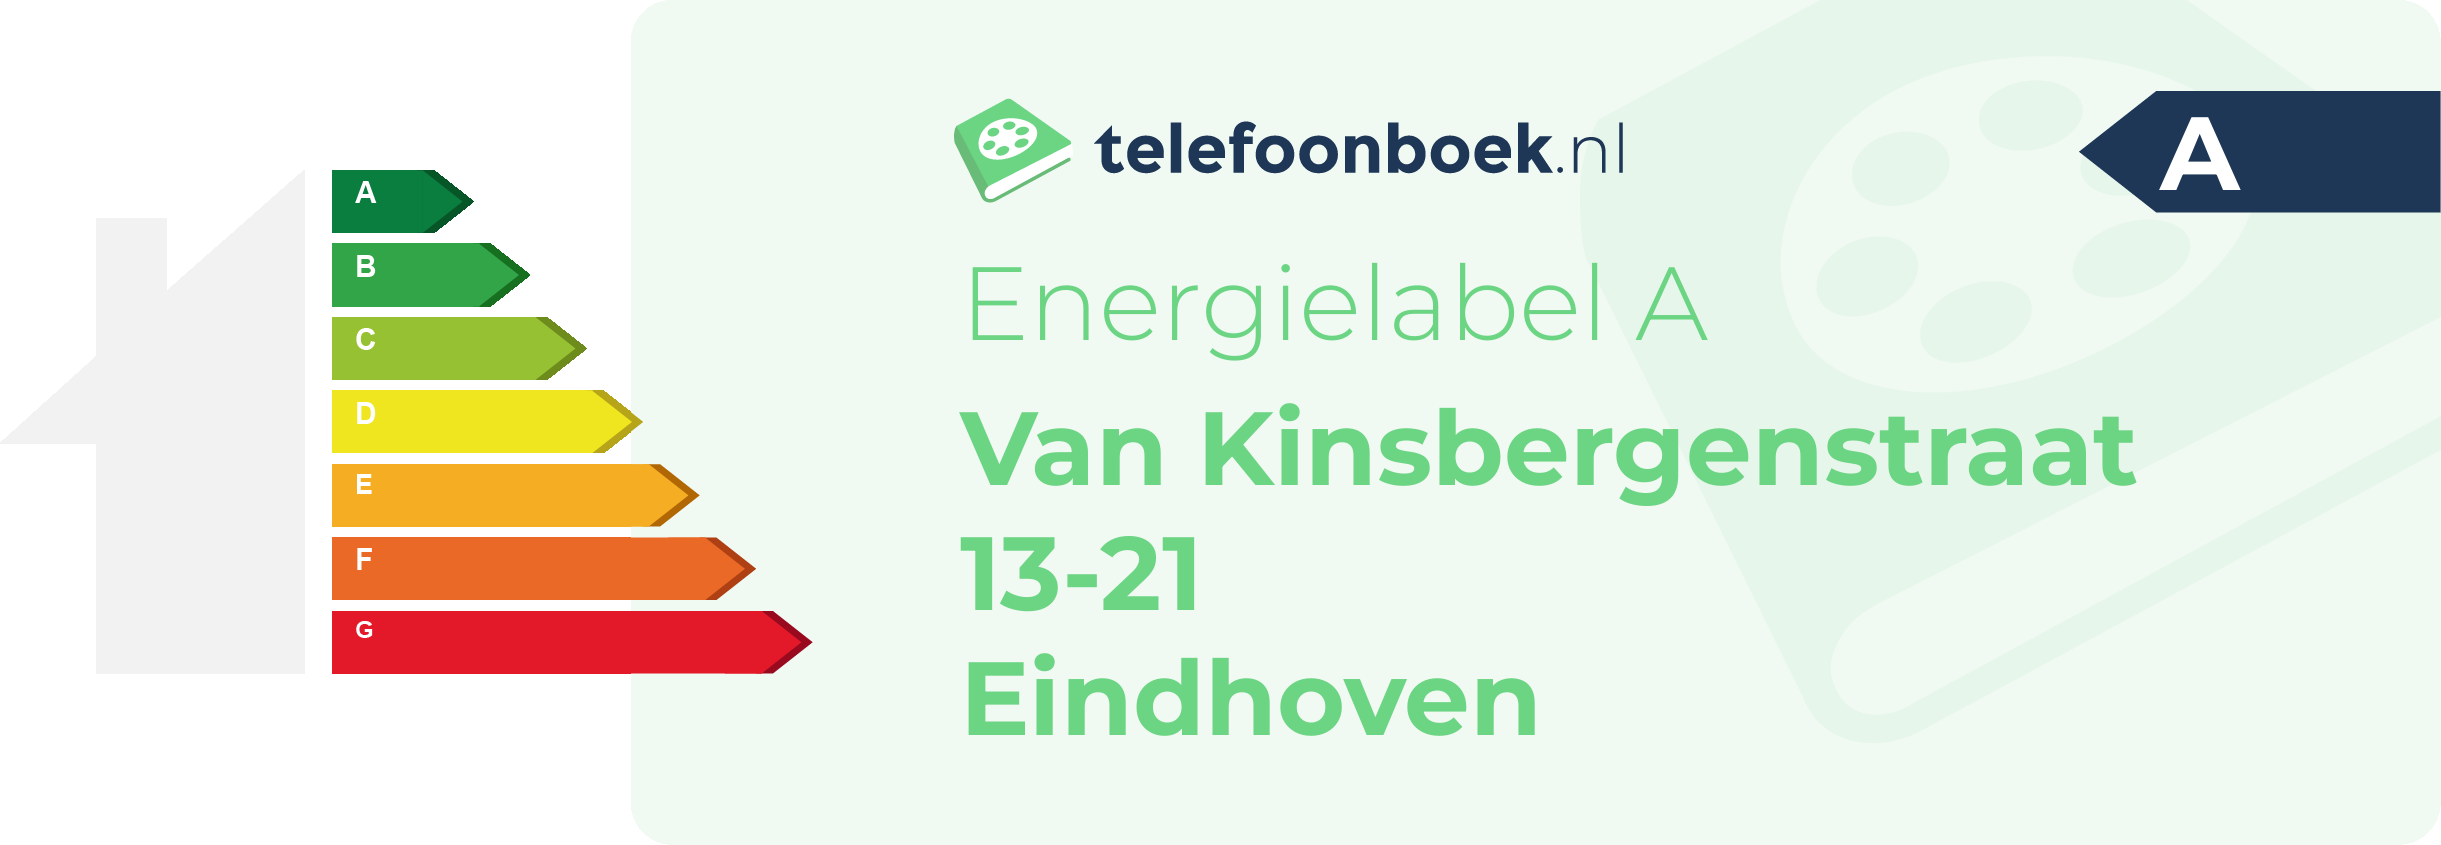 Energielabel Van Kinsbergenstraat 13-21 Eindhoven